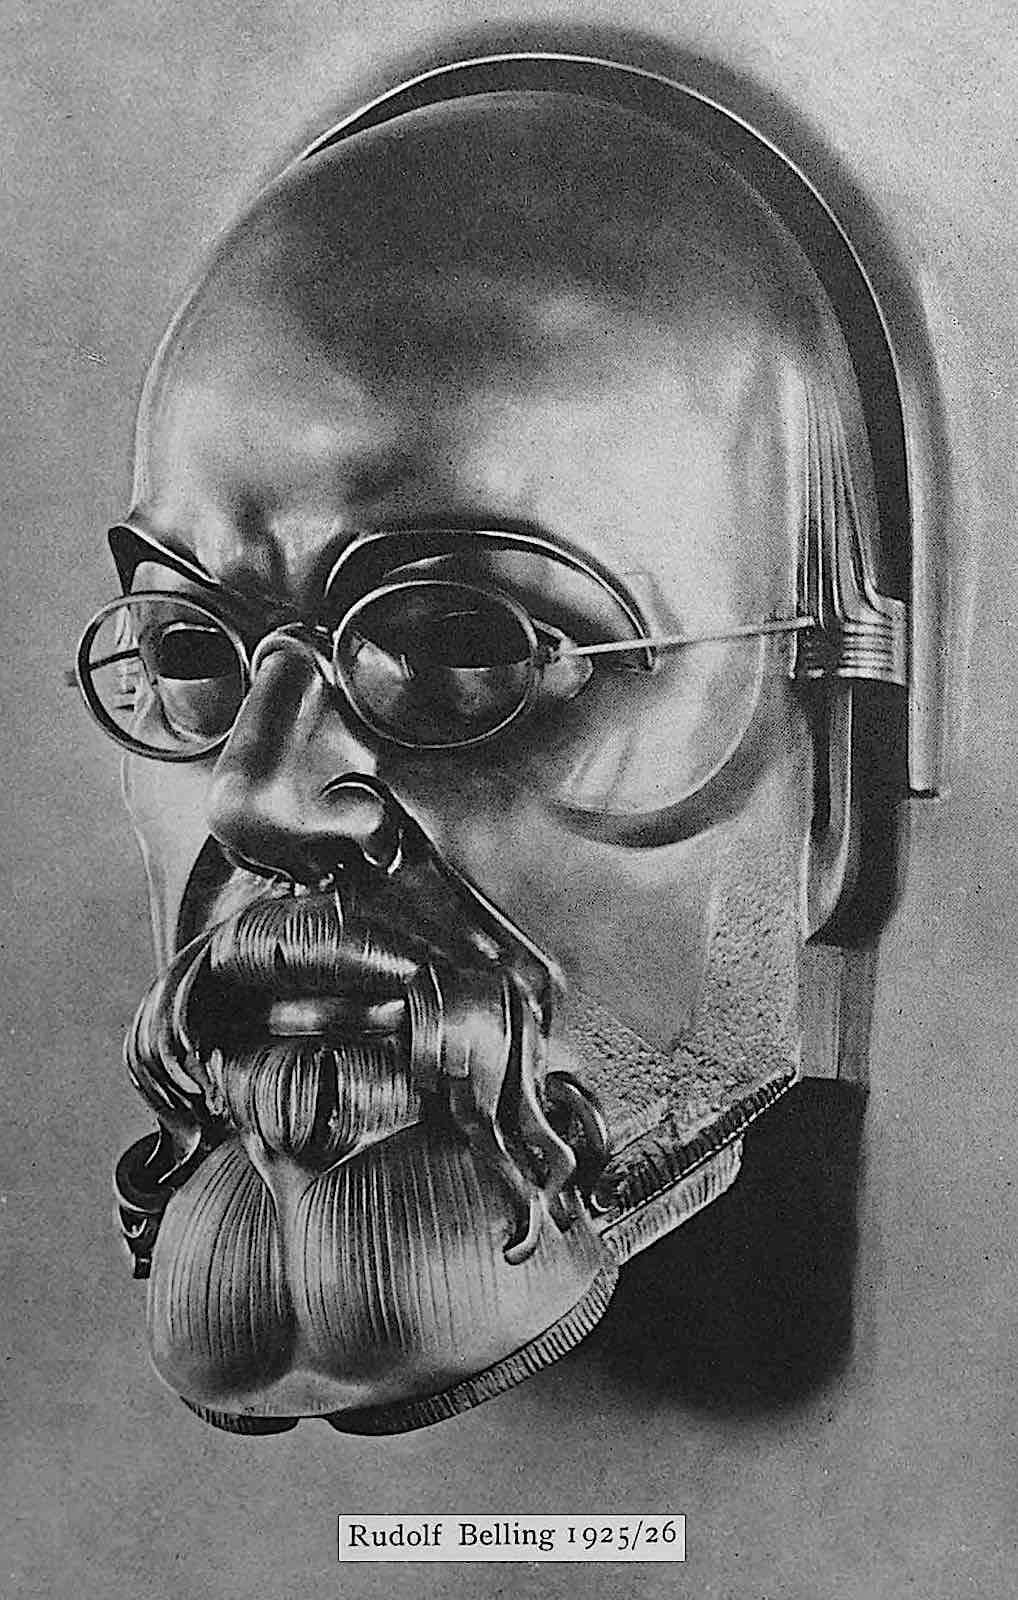 Rudolf Belling metal art 1925, a man's head